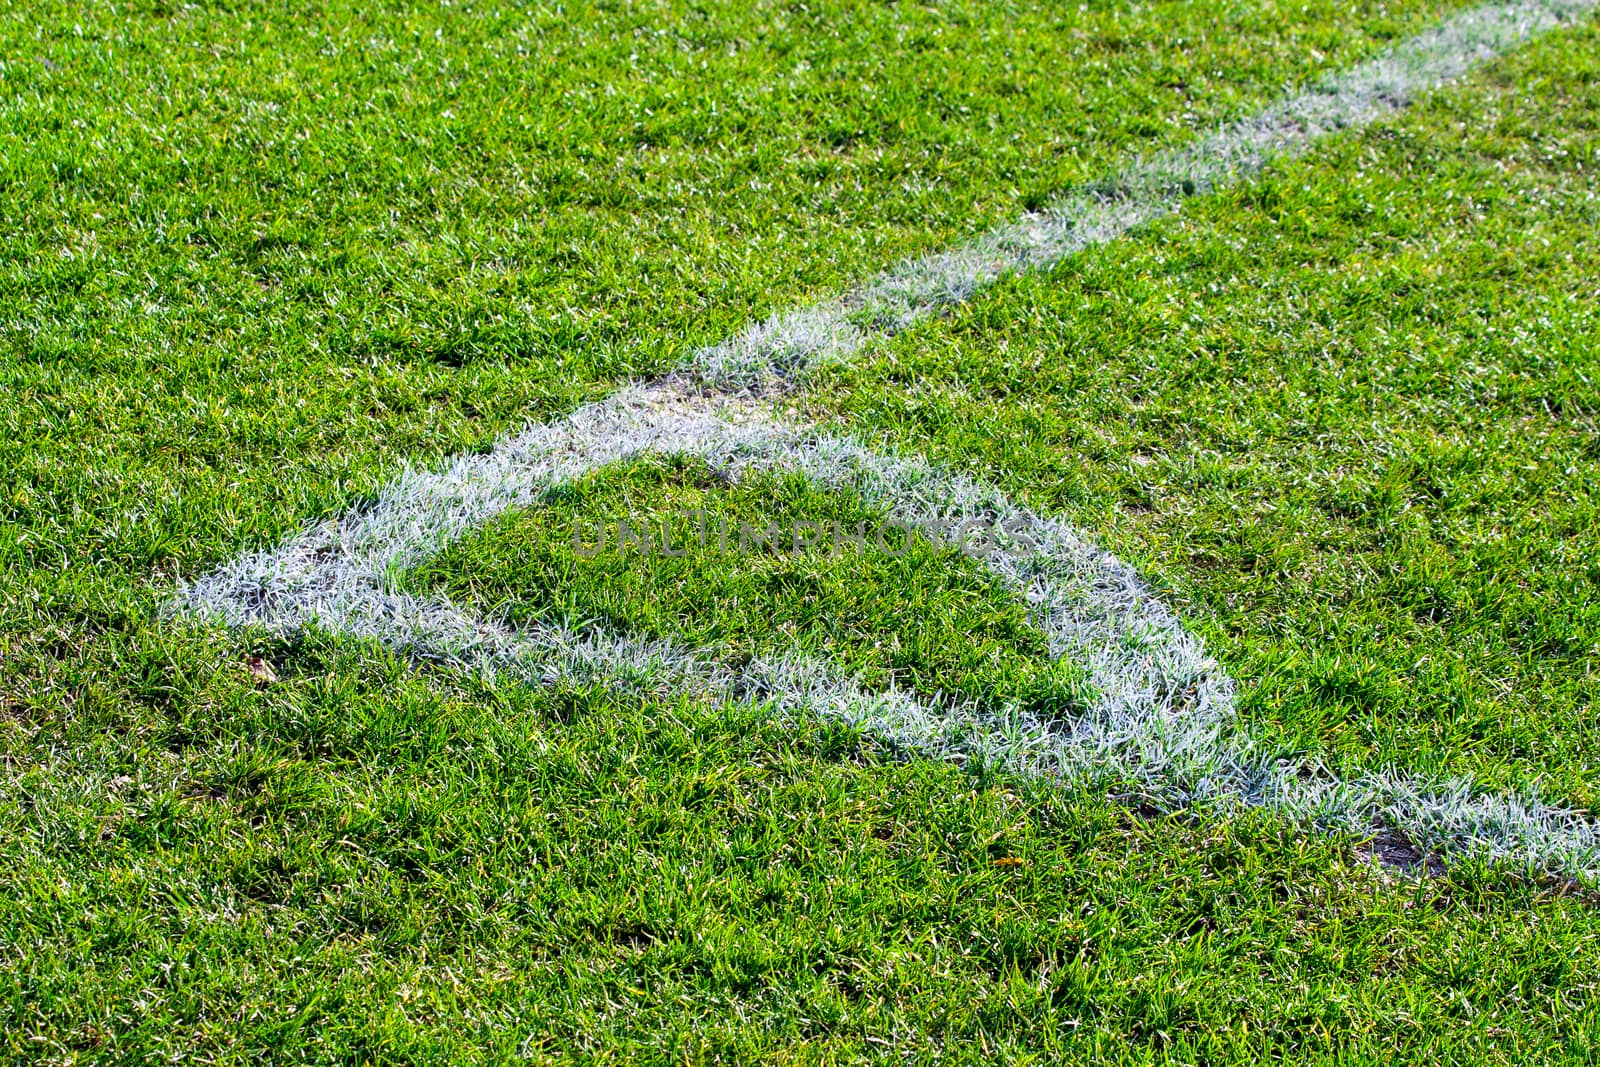 corner point on the football field soccer